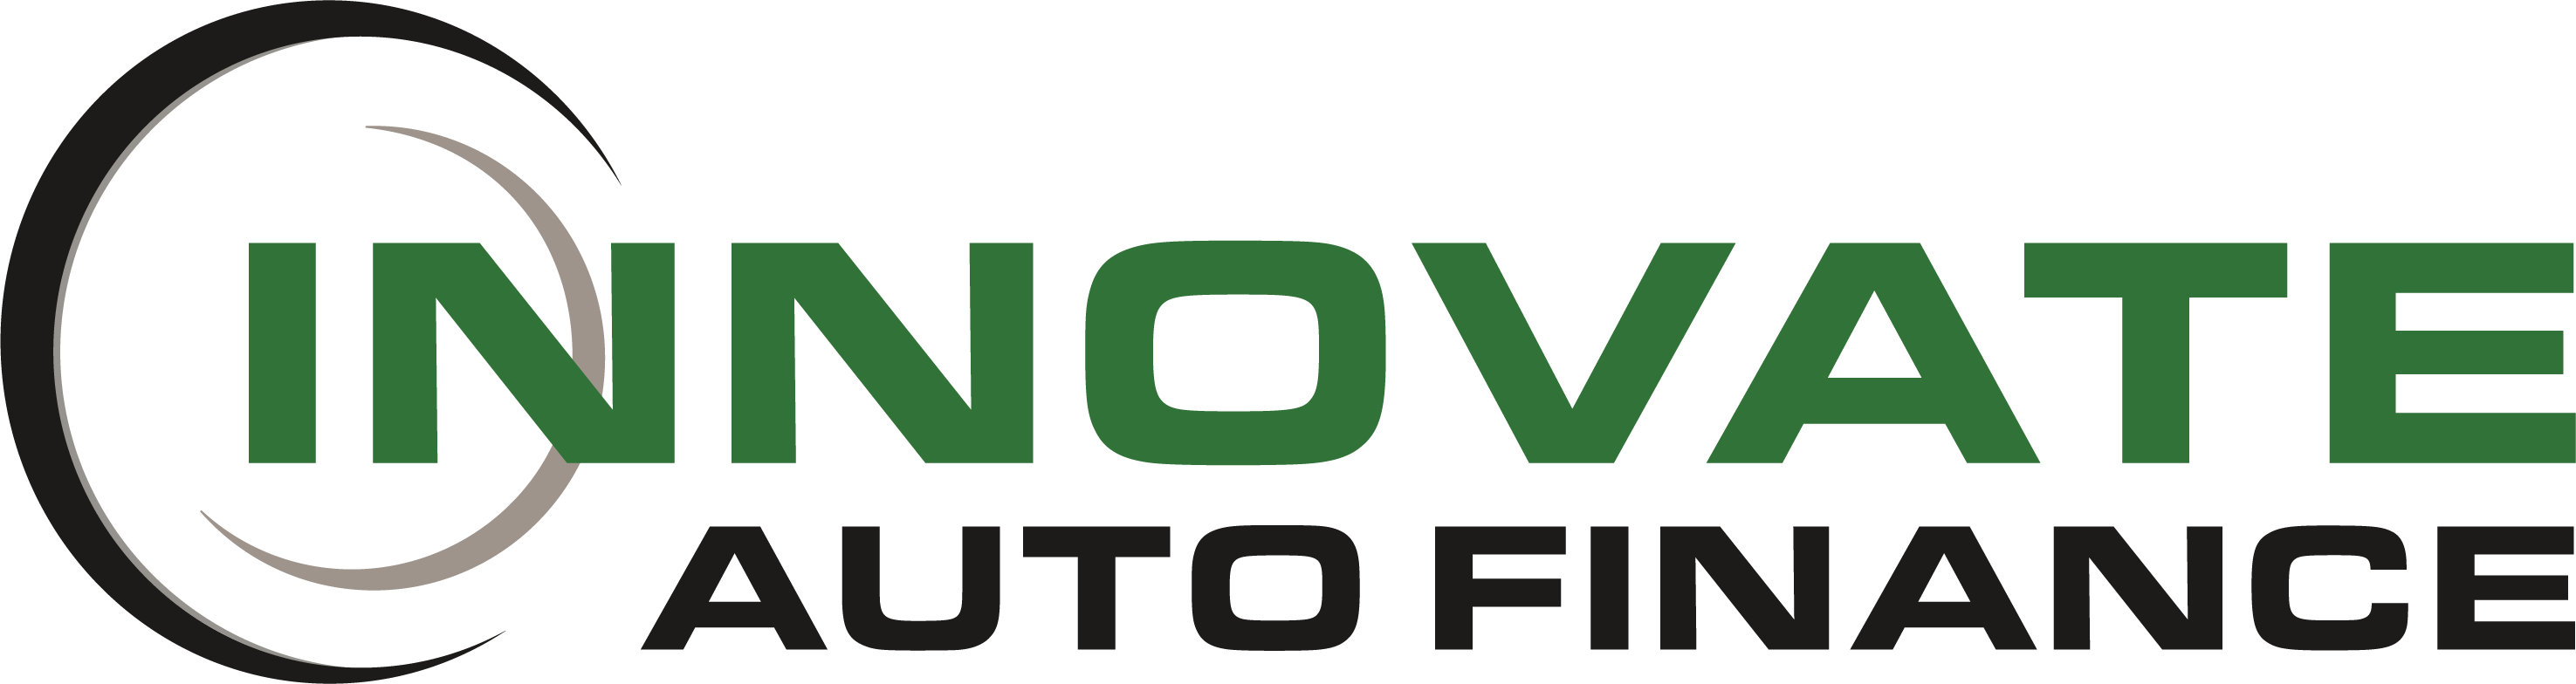 Auto Finance Logo - Innovate Auto Finance